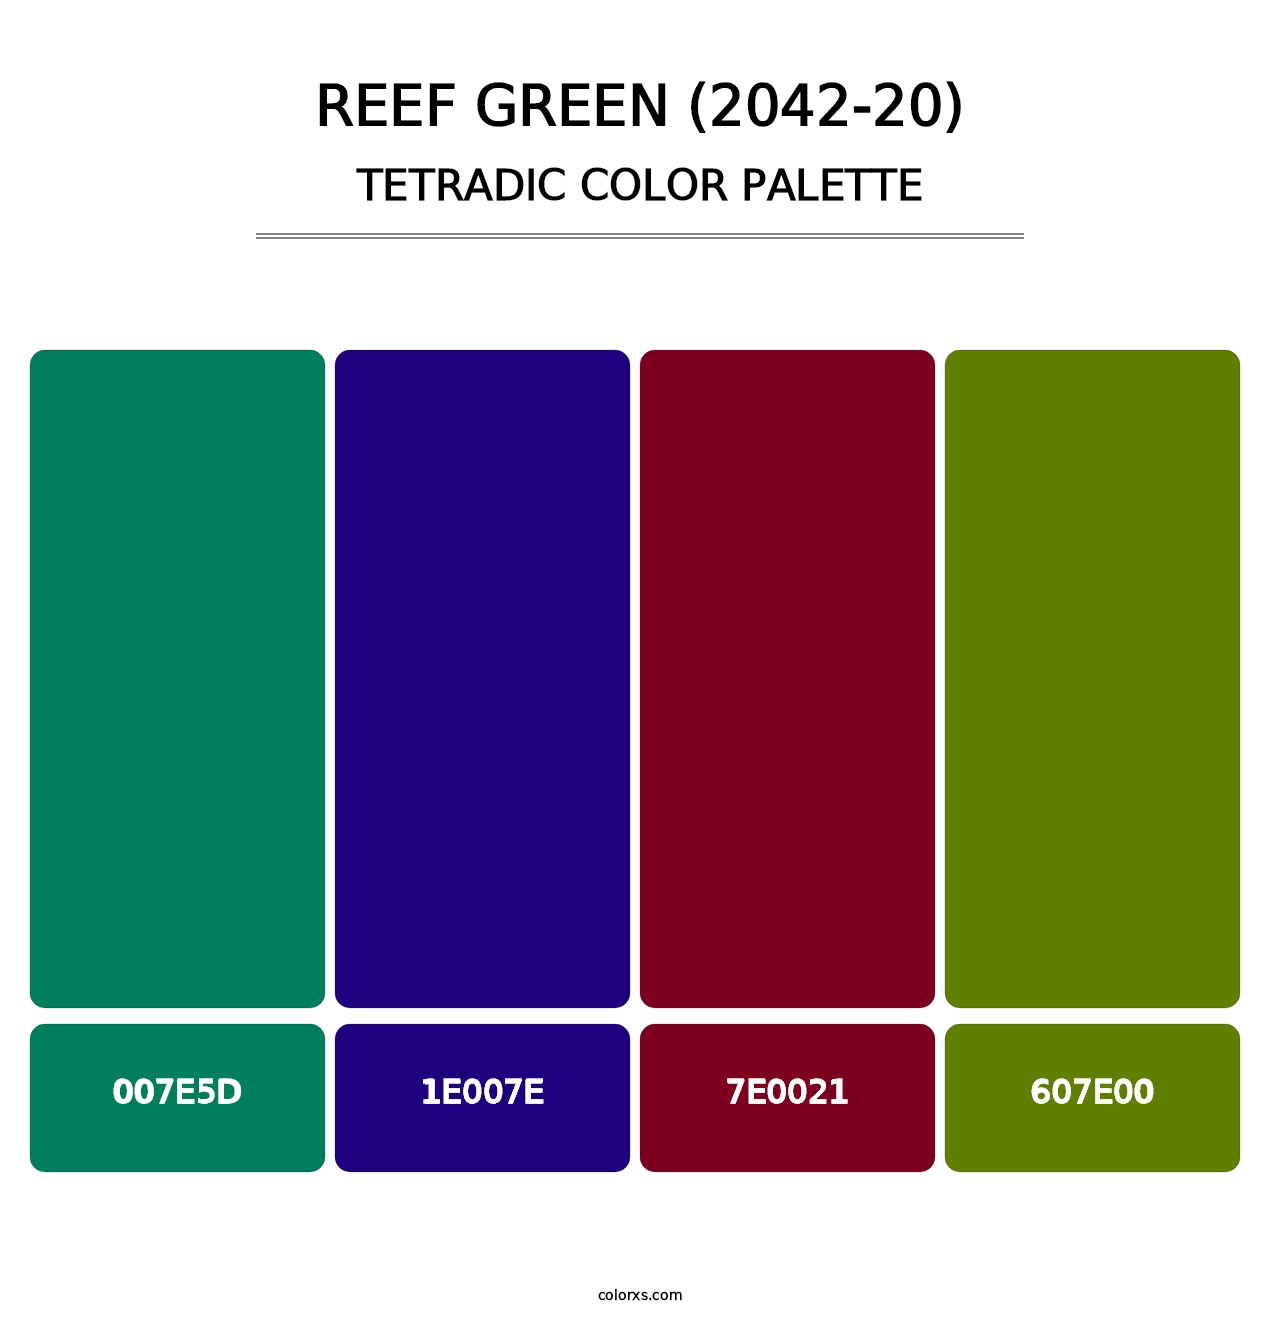 Reef Green (2042-20) - Tetradic Color Palette